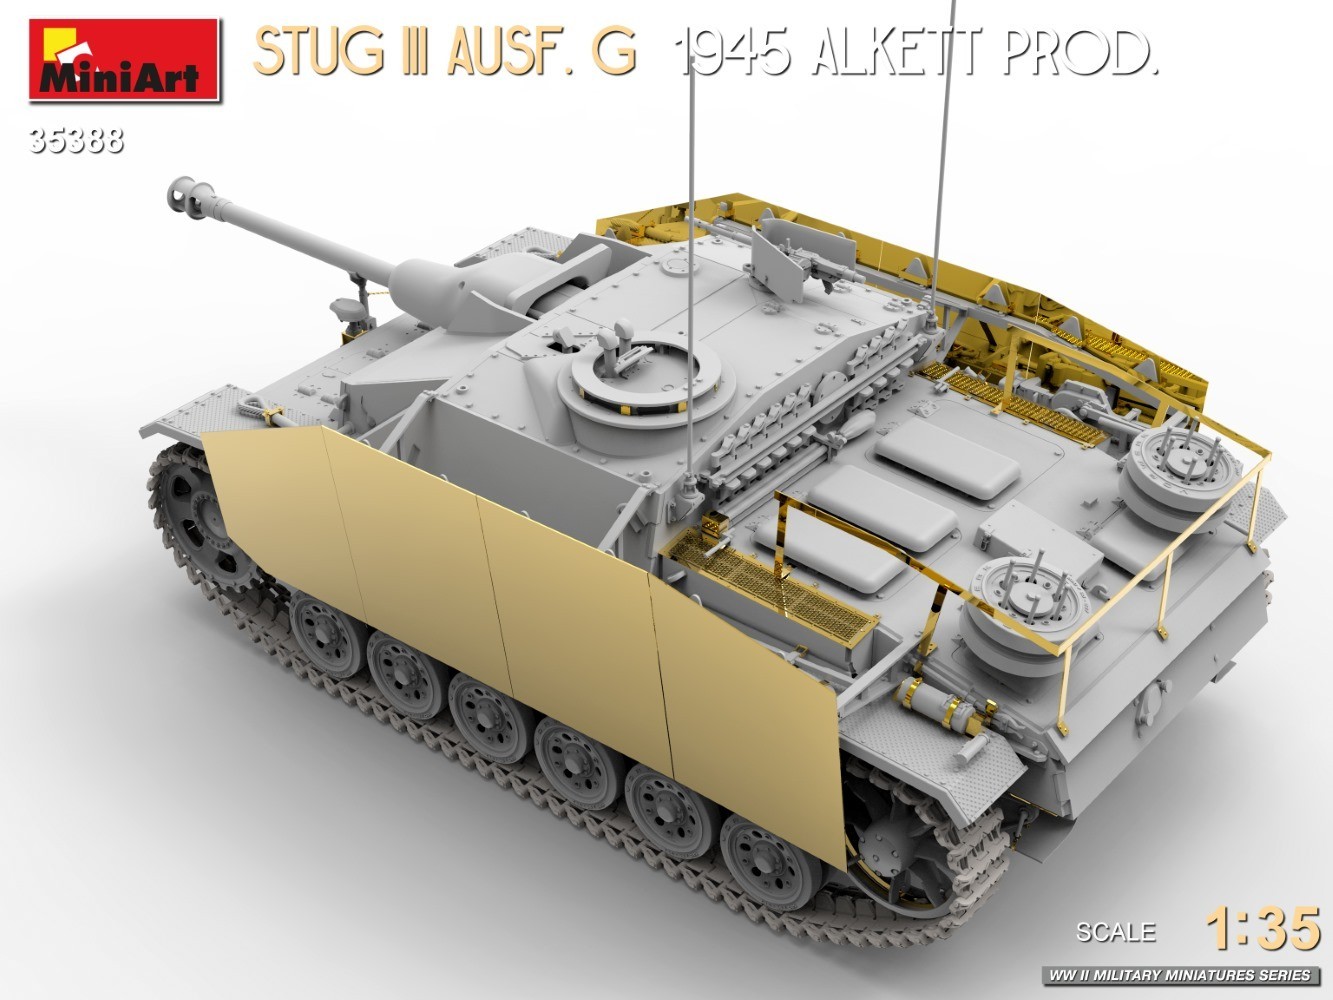 MiniArt to Release Highly Detailed 1/35 StuG III Ausf. G 1945 Alkett Prod. Model Kit CAD-4